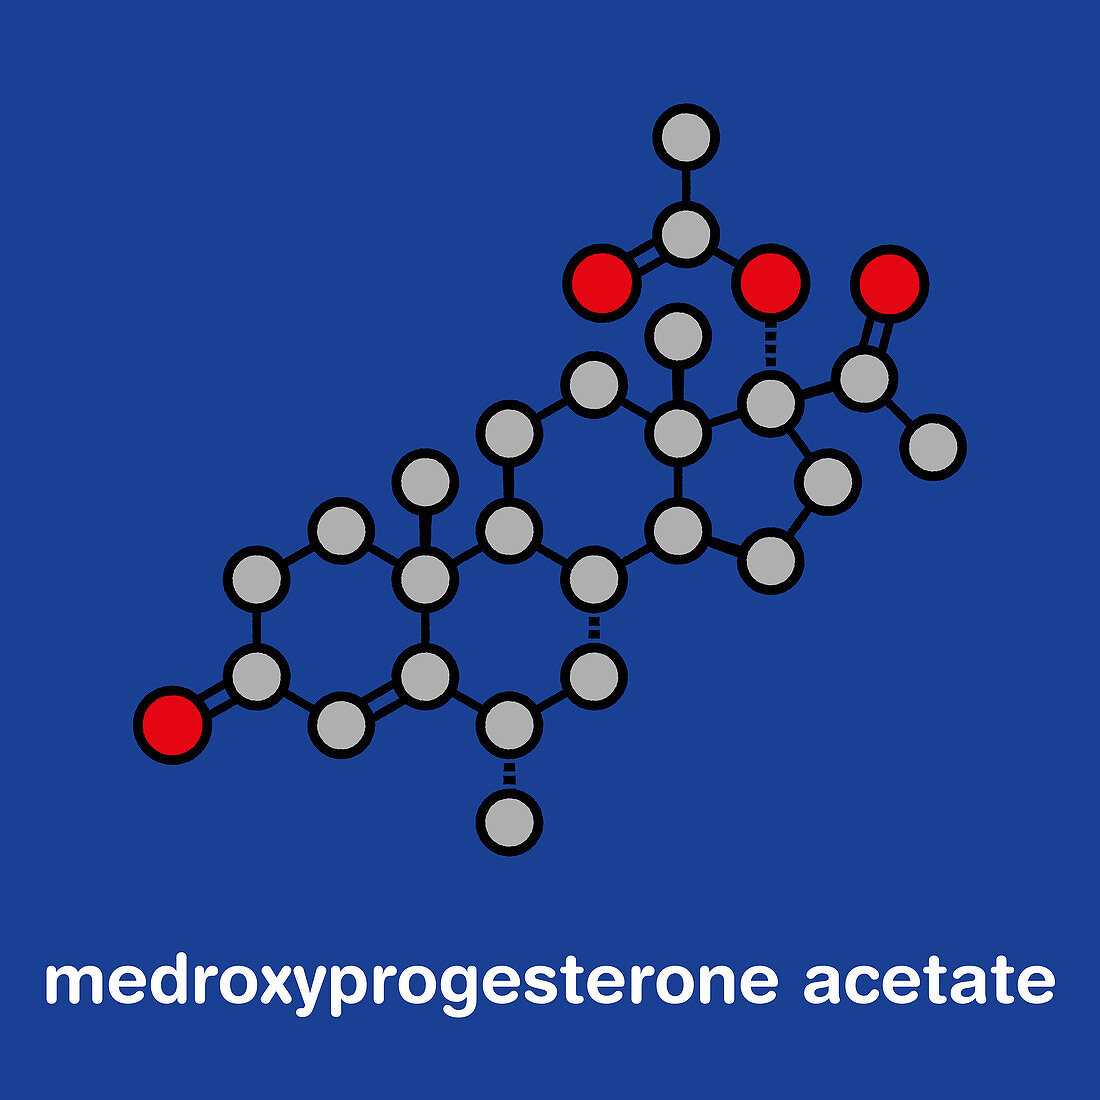 Medroxyprogesterone acetate progestin hormone drug